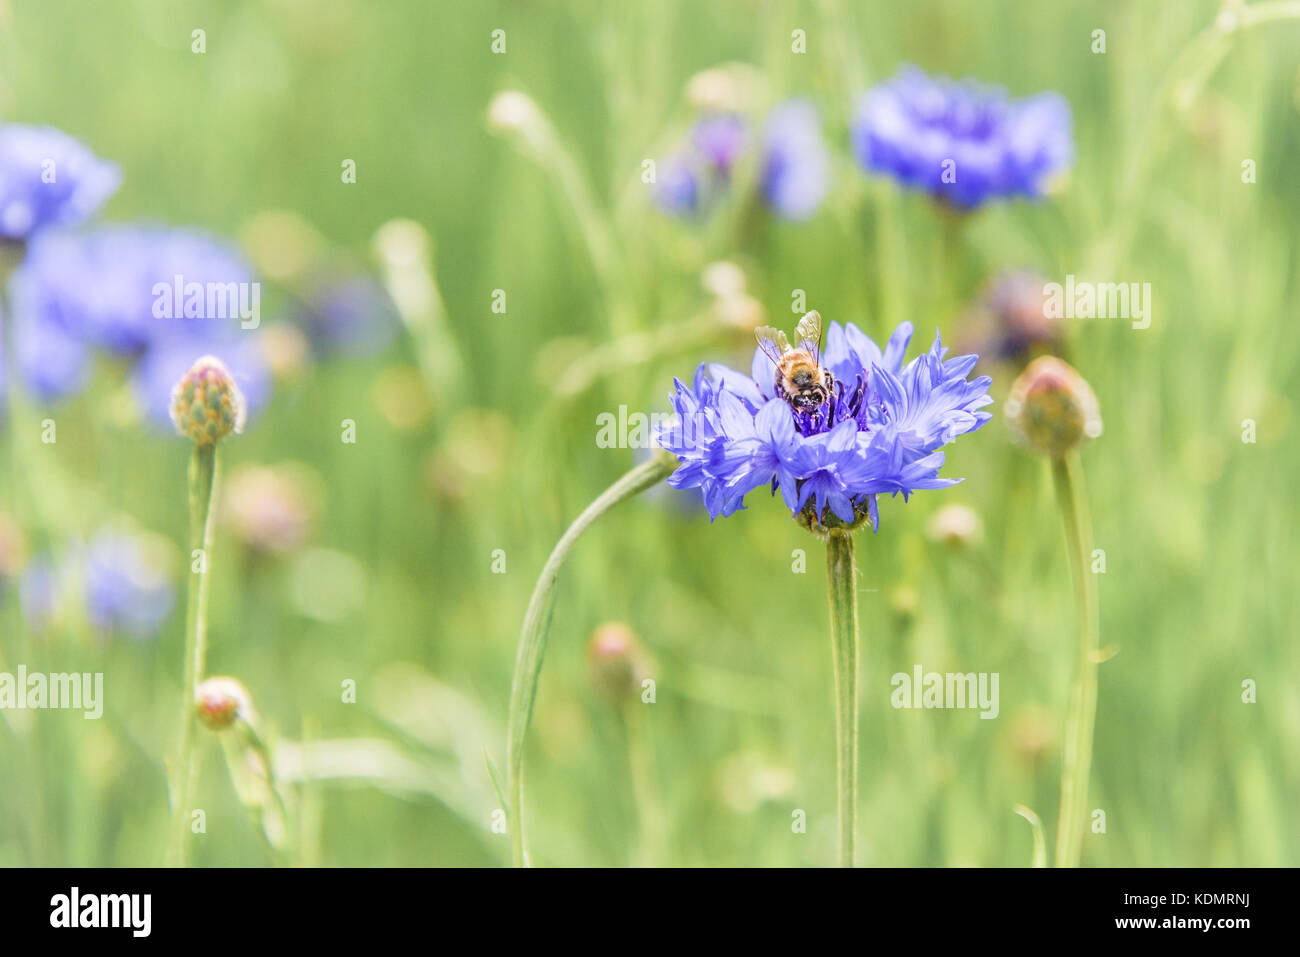 Honeybee on a Blue Cornflower Stock Photo